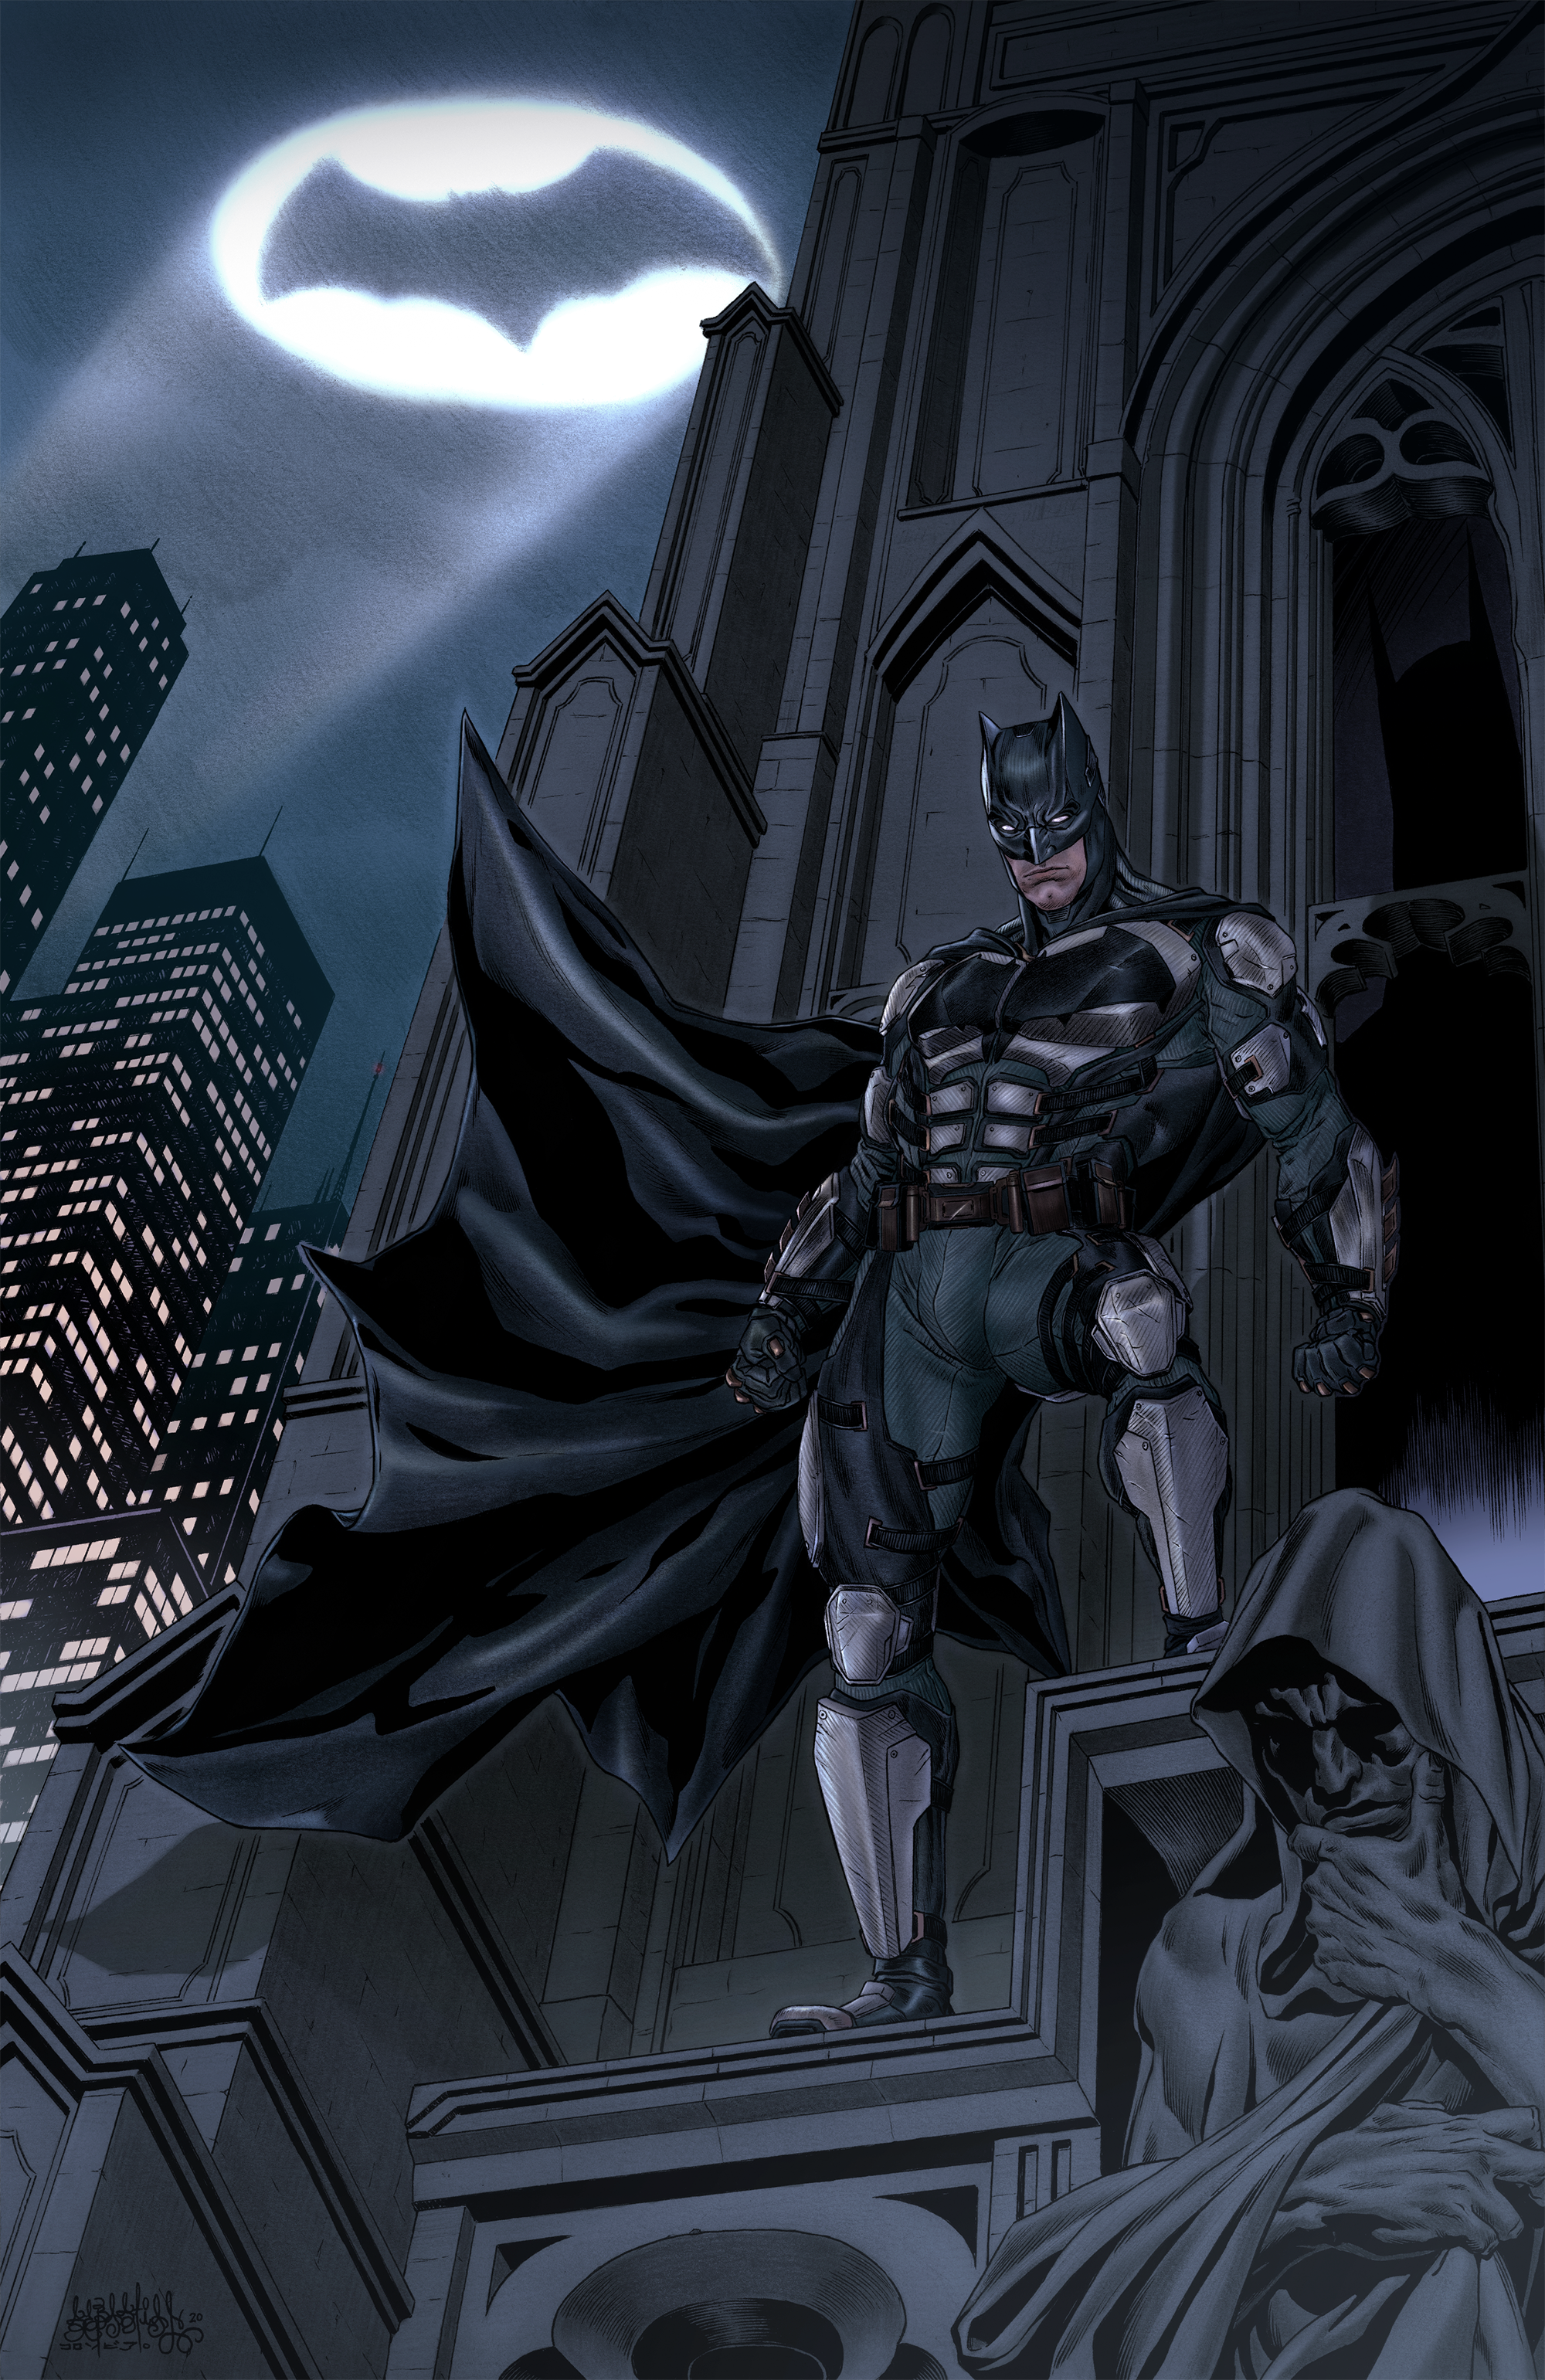 Wallpaper, Justice League Ben Affleck, Batman Returns, The Dark Knight, artwork, Gotham City, gargoyles 2000x3081